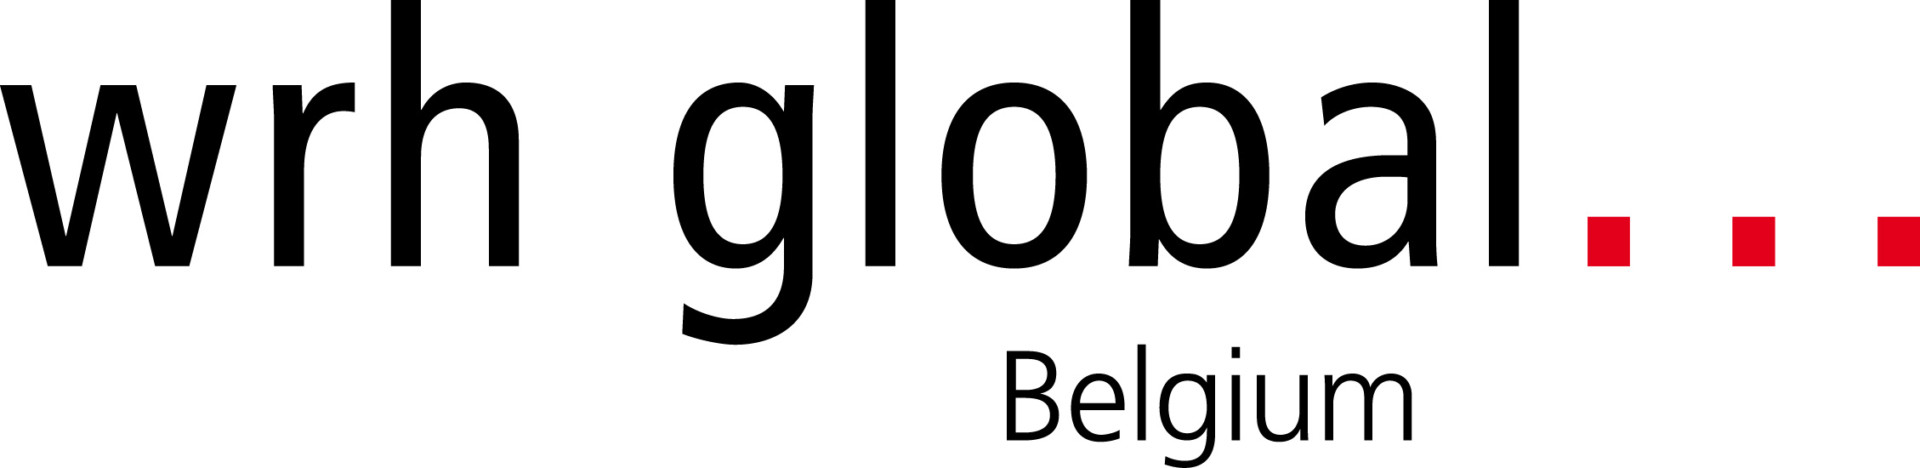 wrh_global_belgium_4c